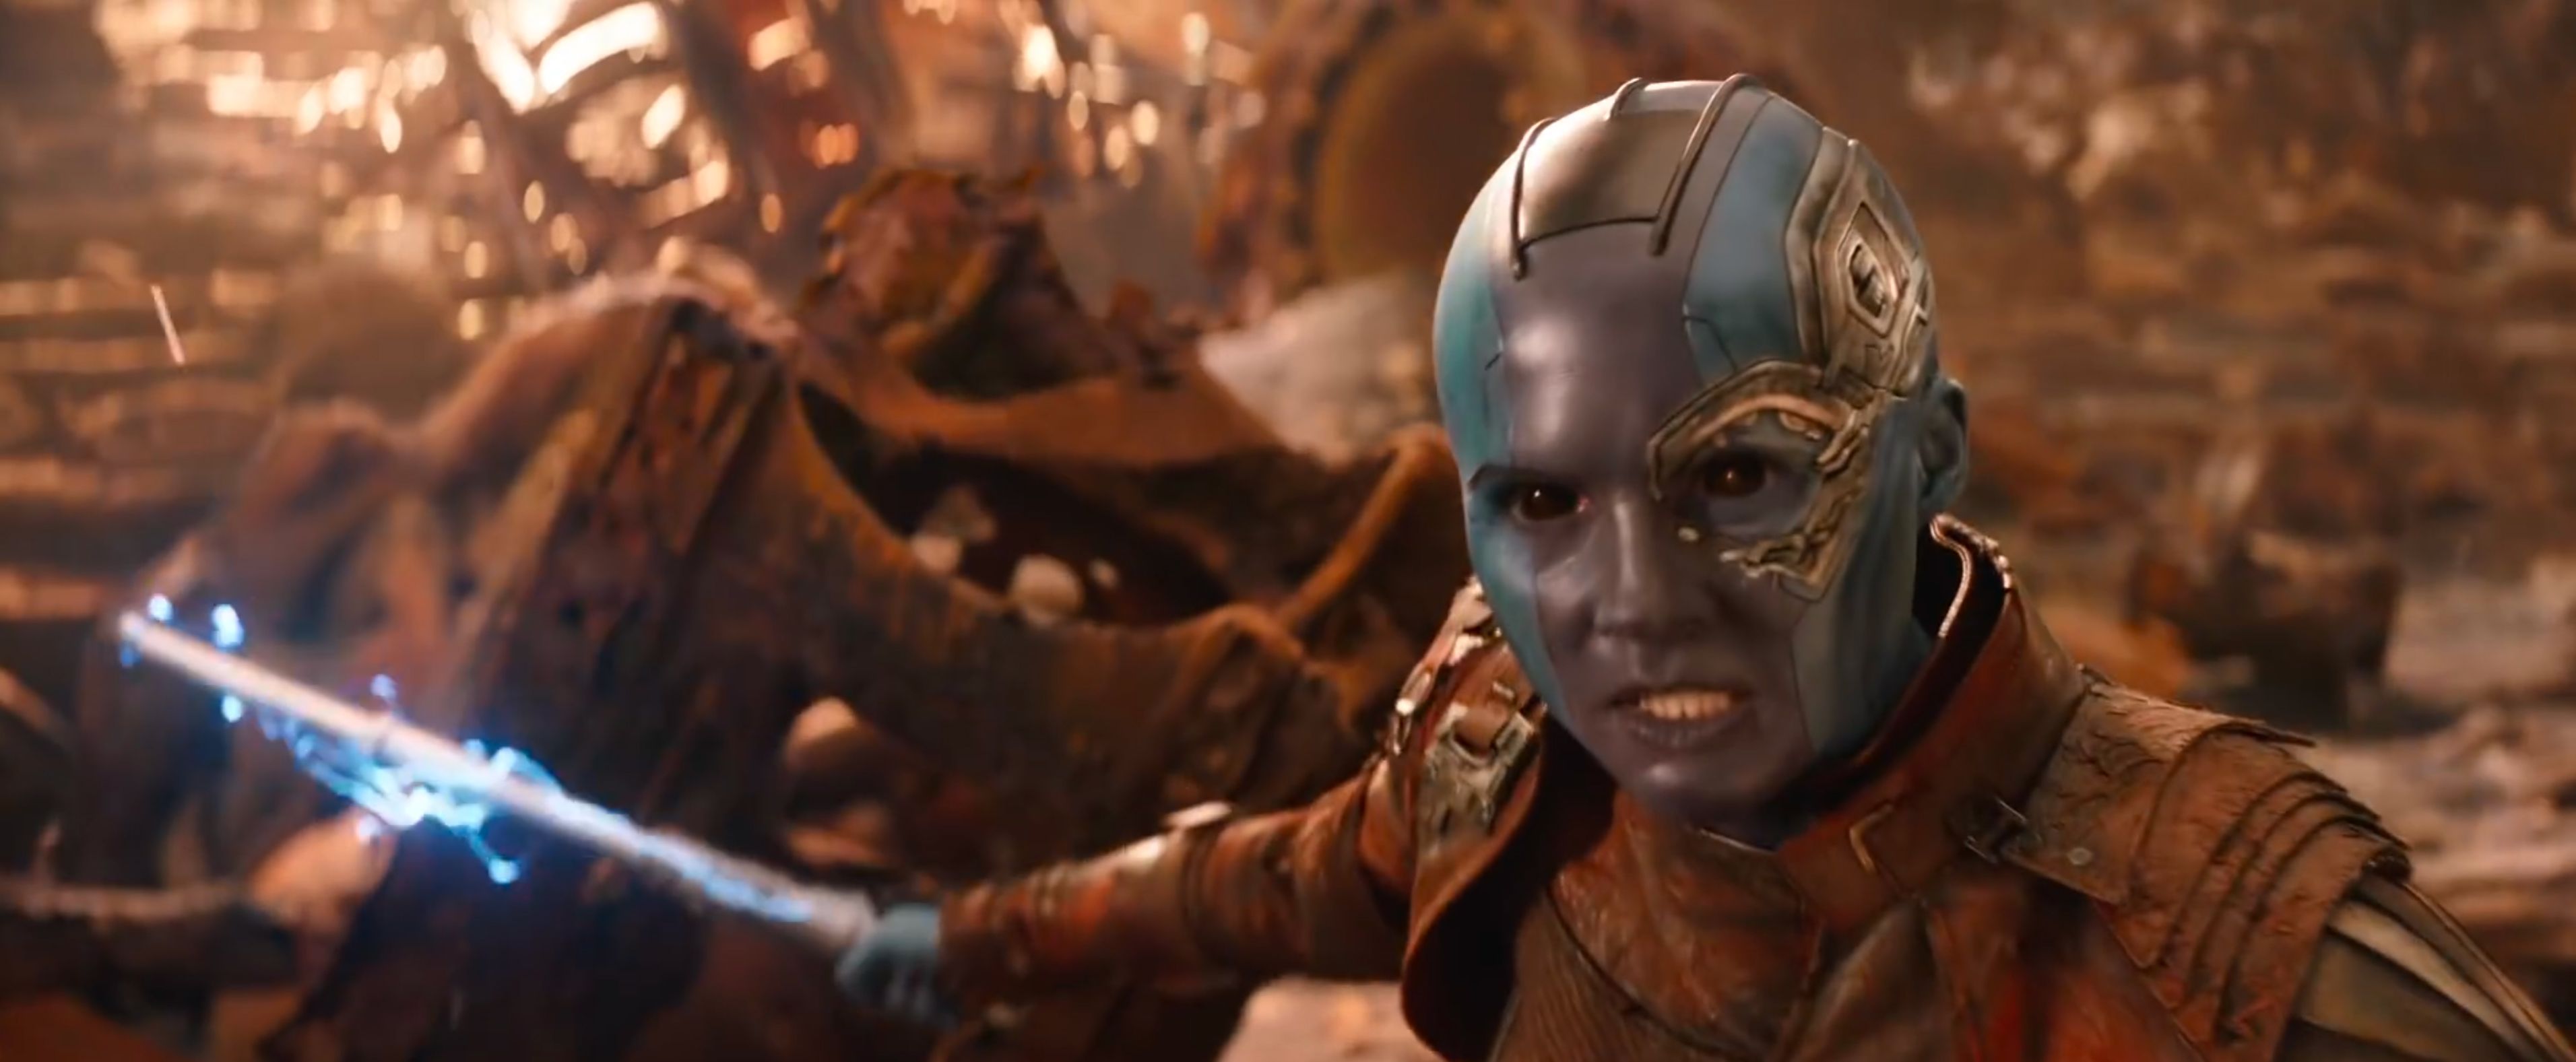 Avengers Infinity War Super Bowl Trailer 18